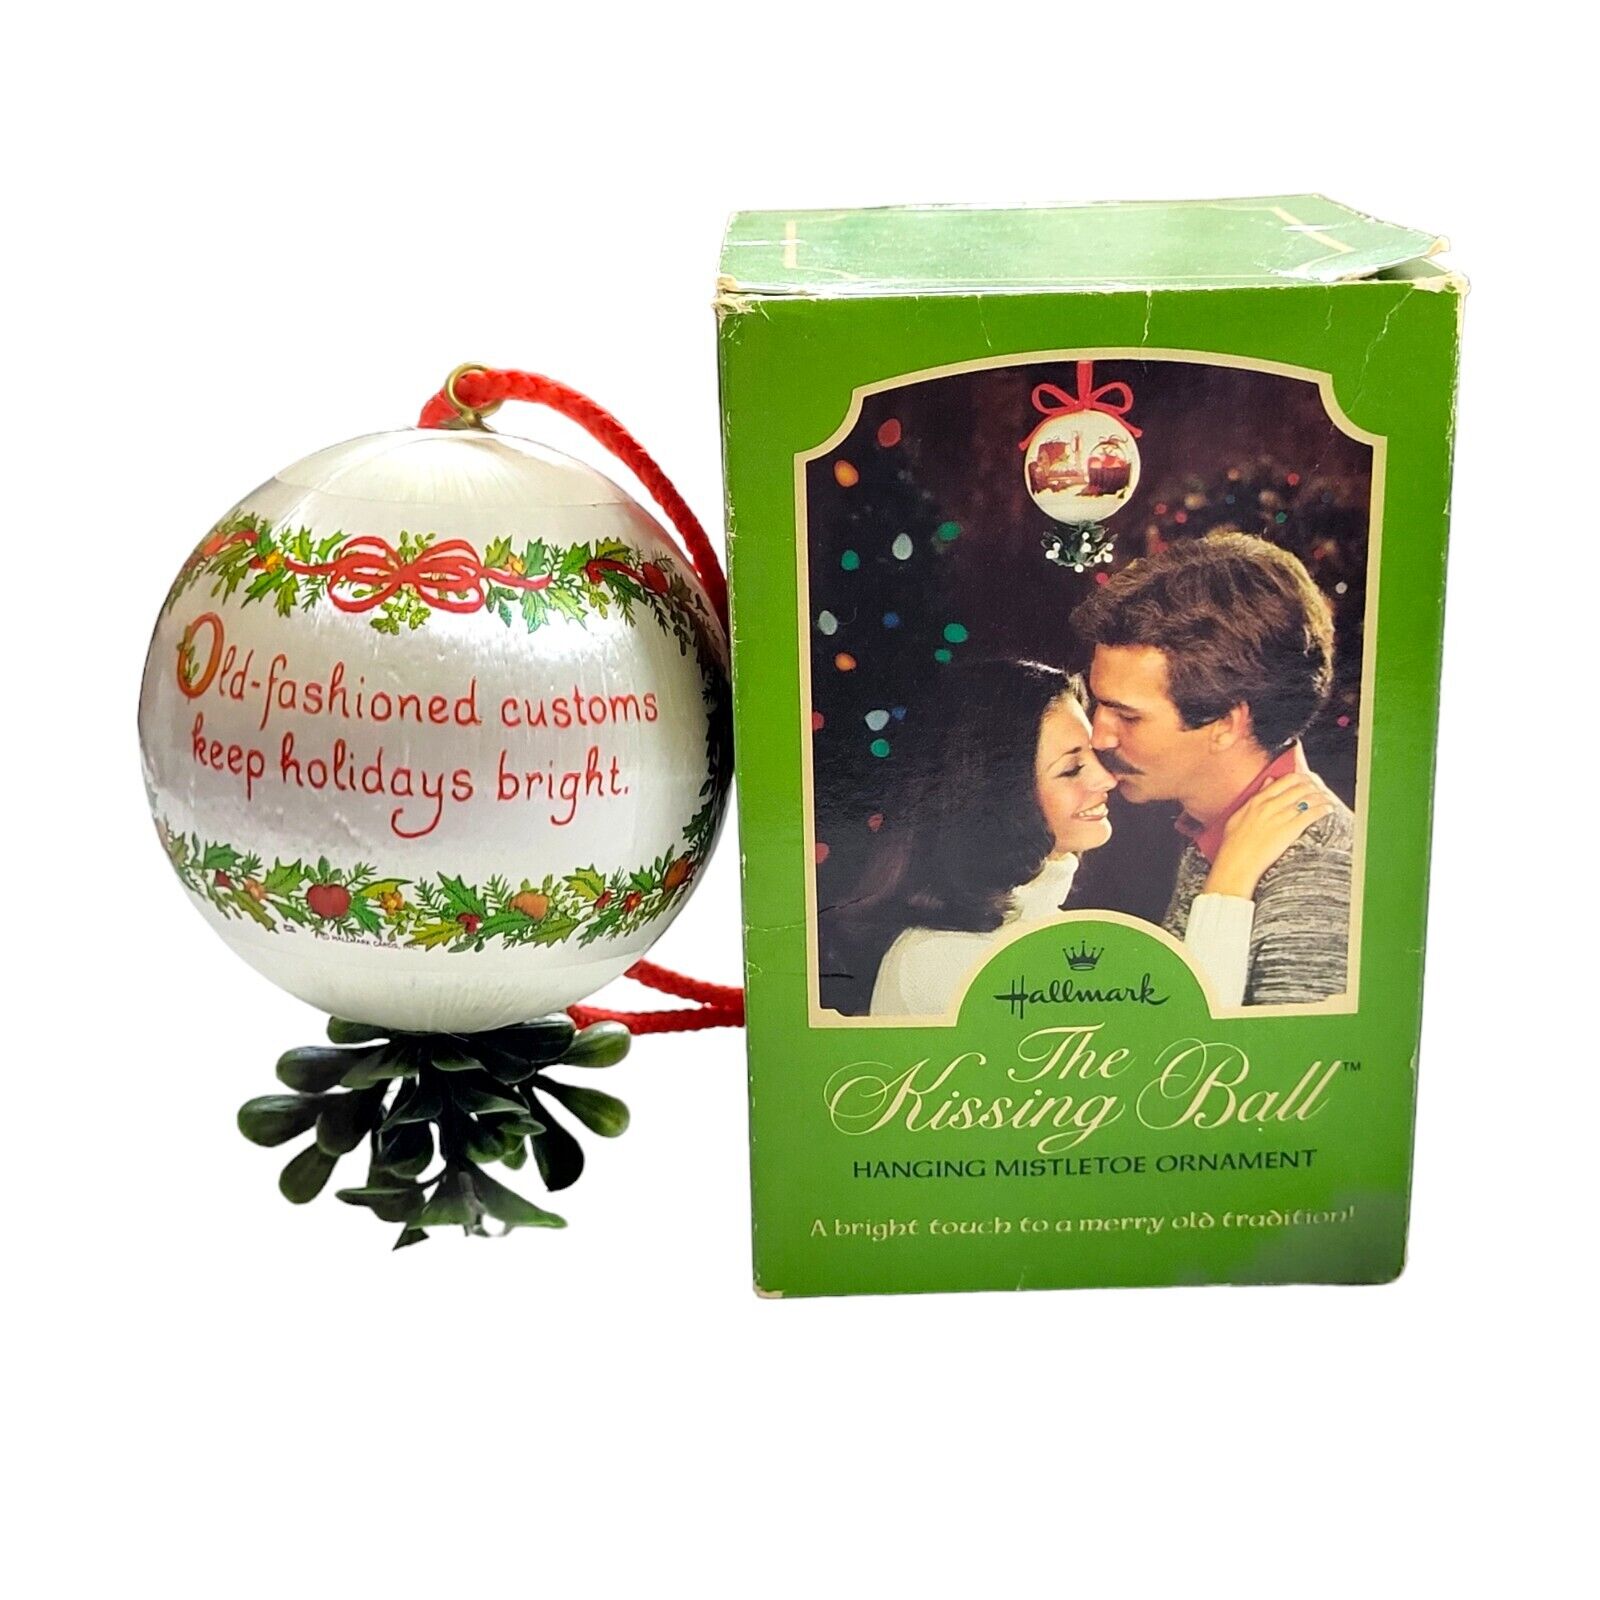 Vtg Hallmark Kissing Ball Mistletoe Old Fashioned Customs Keep Holidays Bright